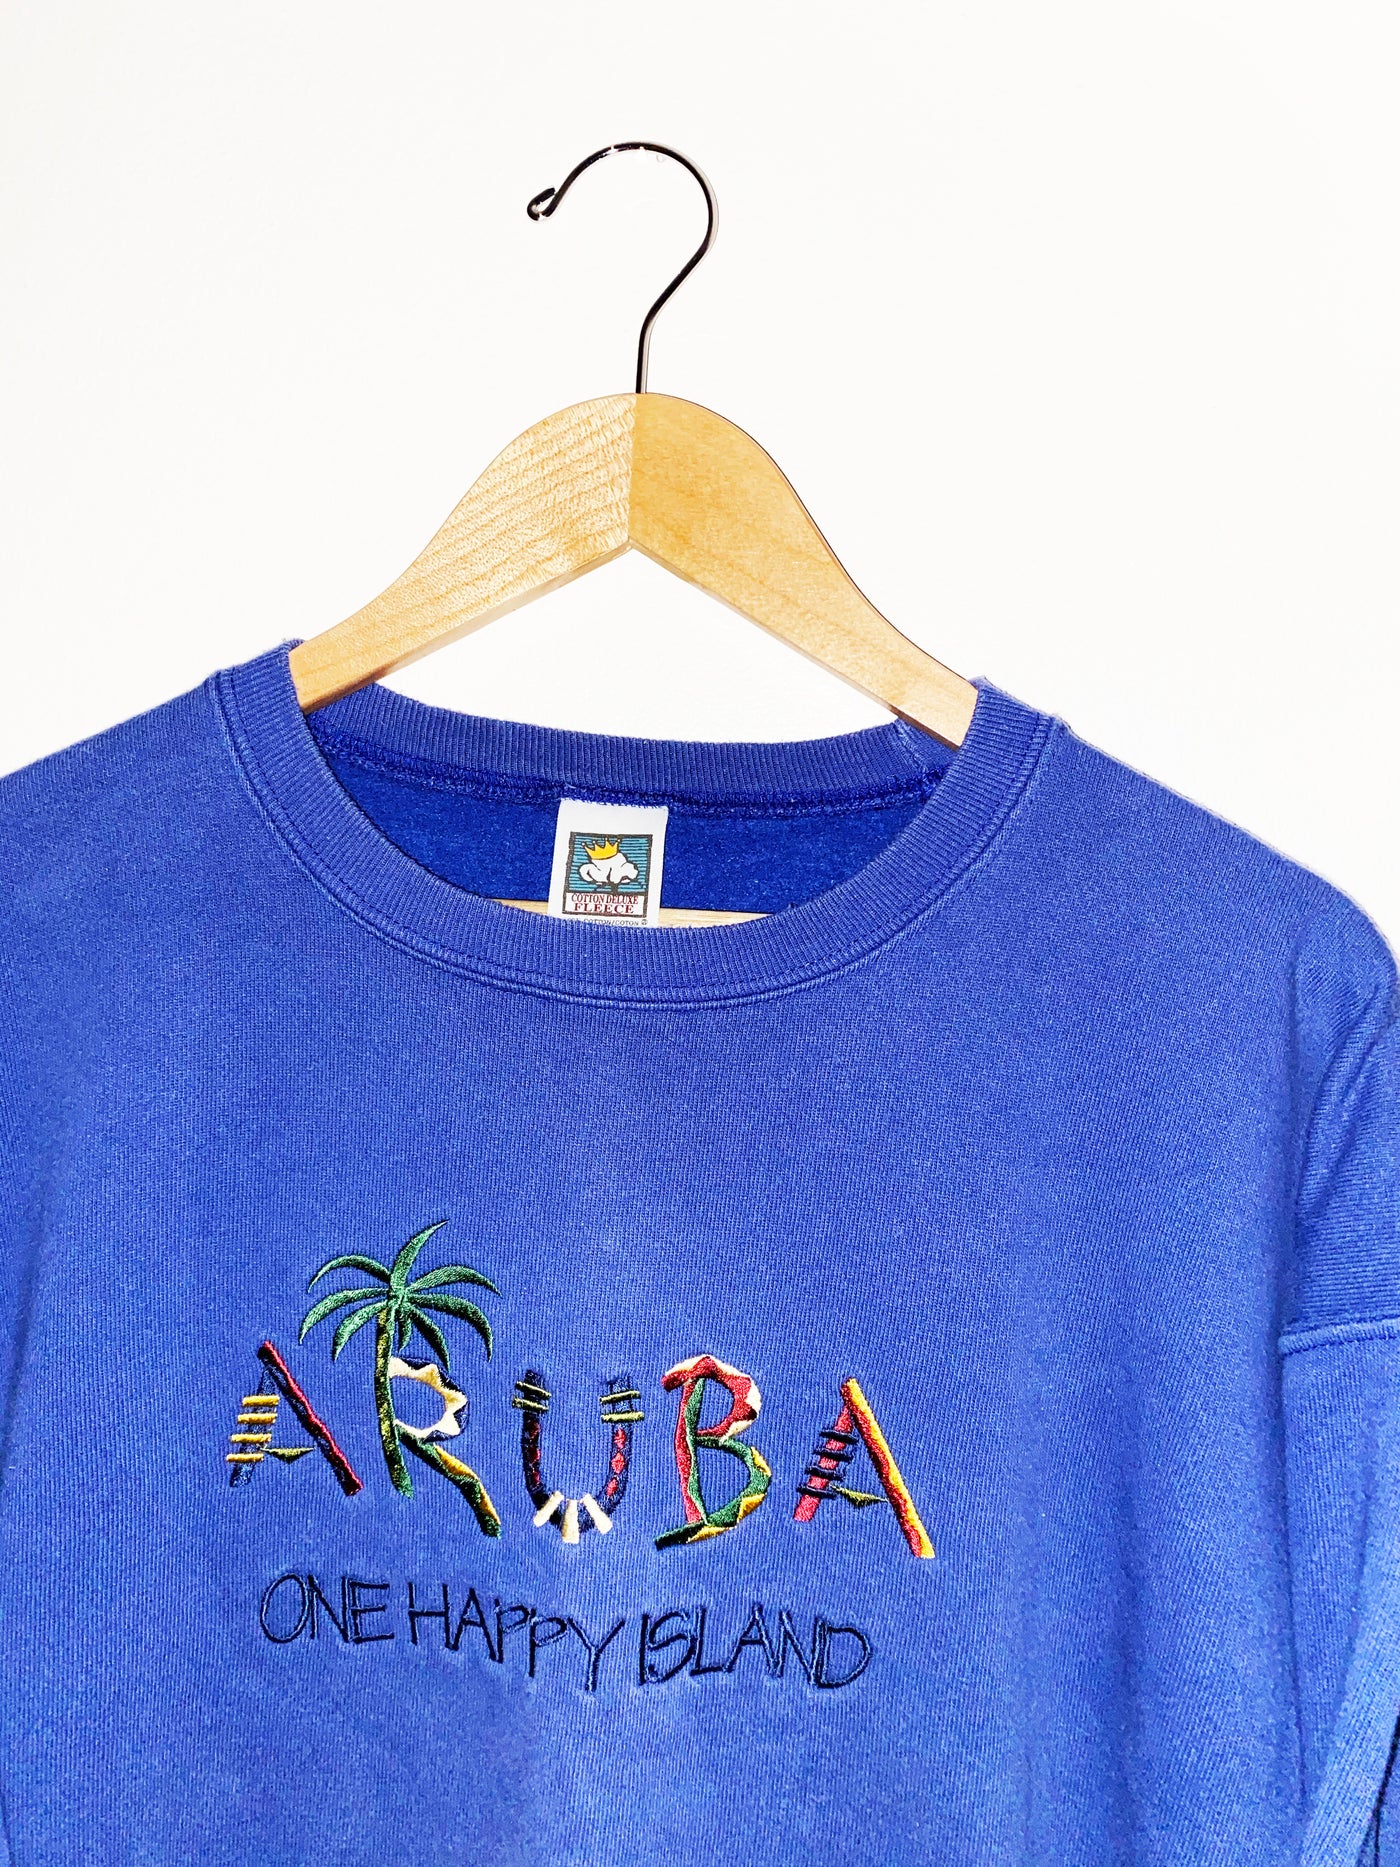 Vintage Embroidered Aruba “One Happy Island” Crewneck